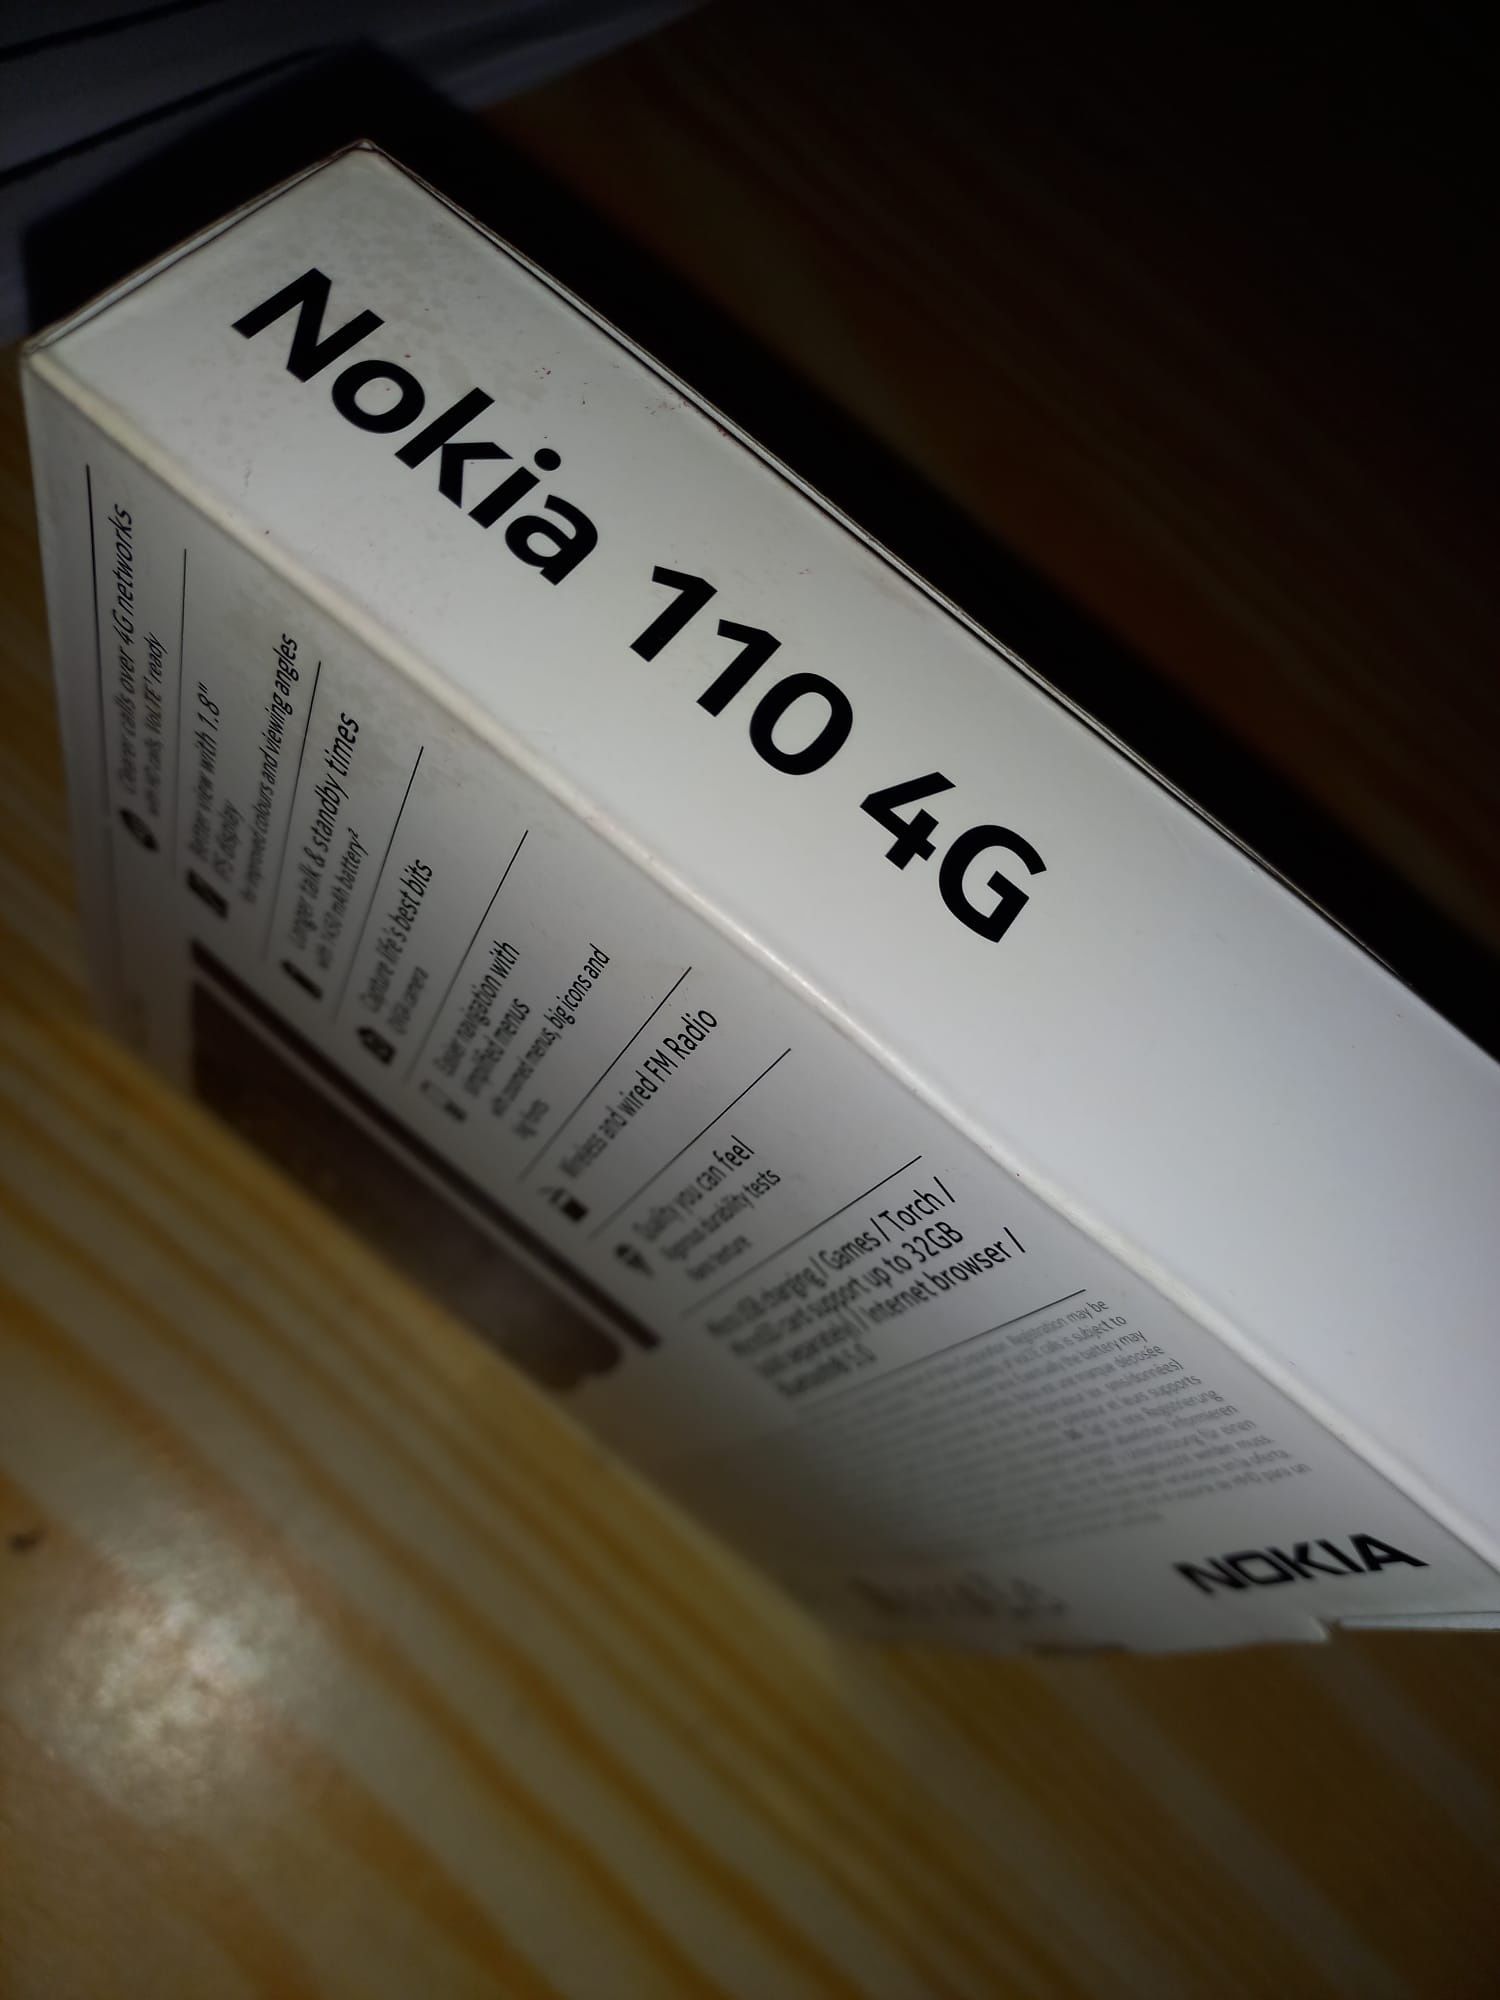 Telefon Nokia 110 4G